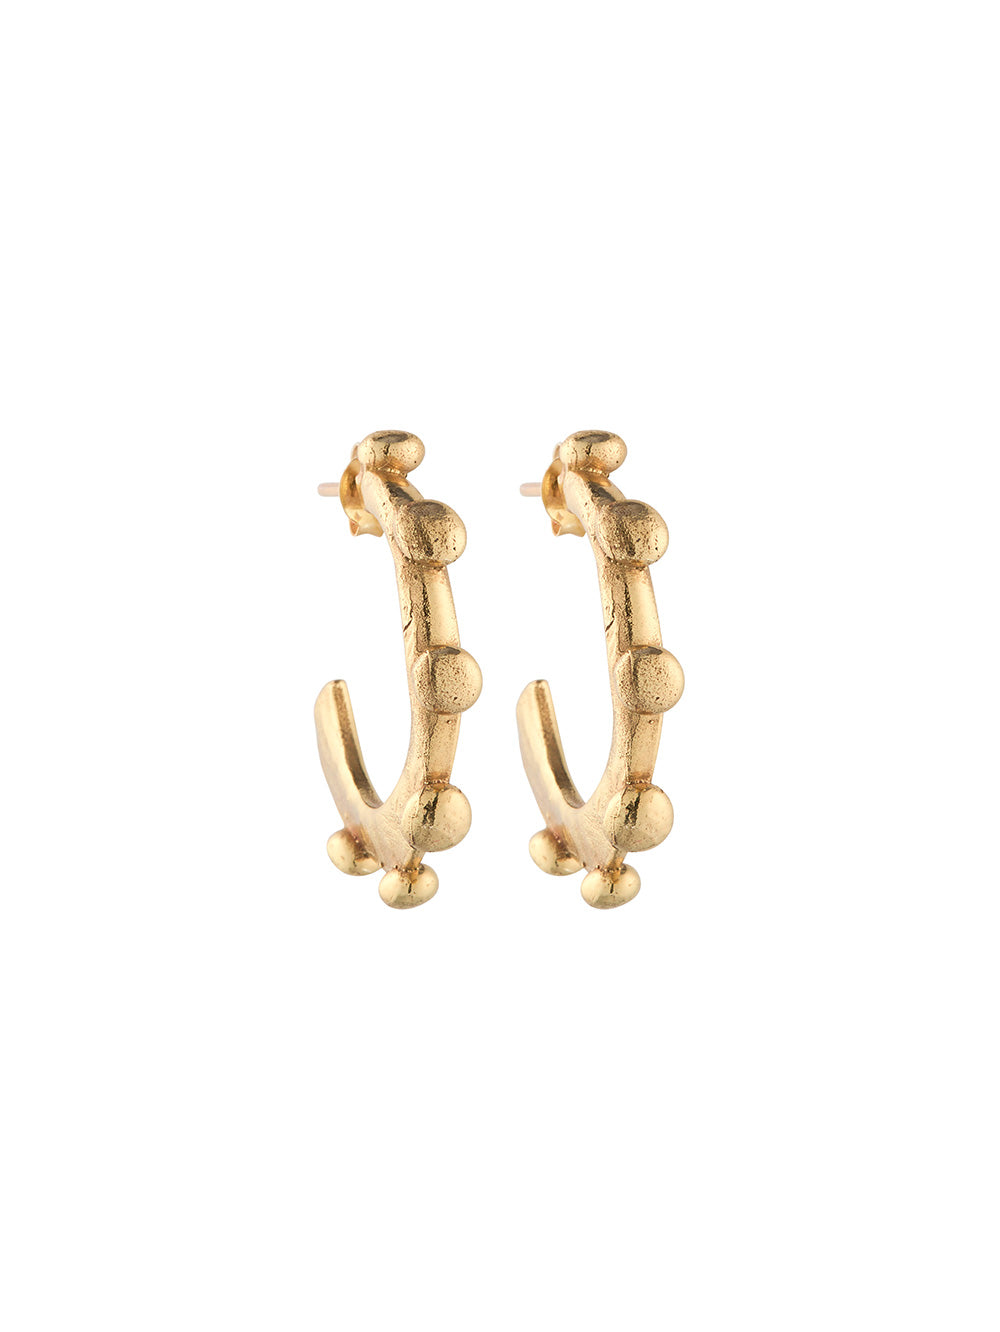 Solita Earrings Small KIVARI | Gold hoops with droplets